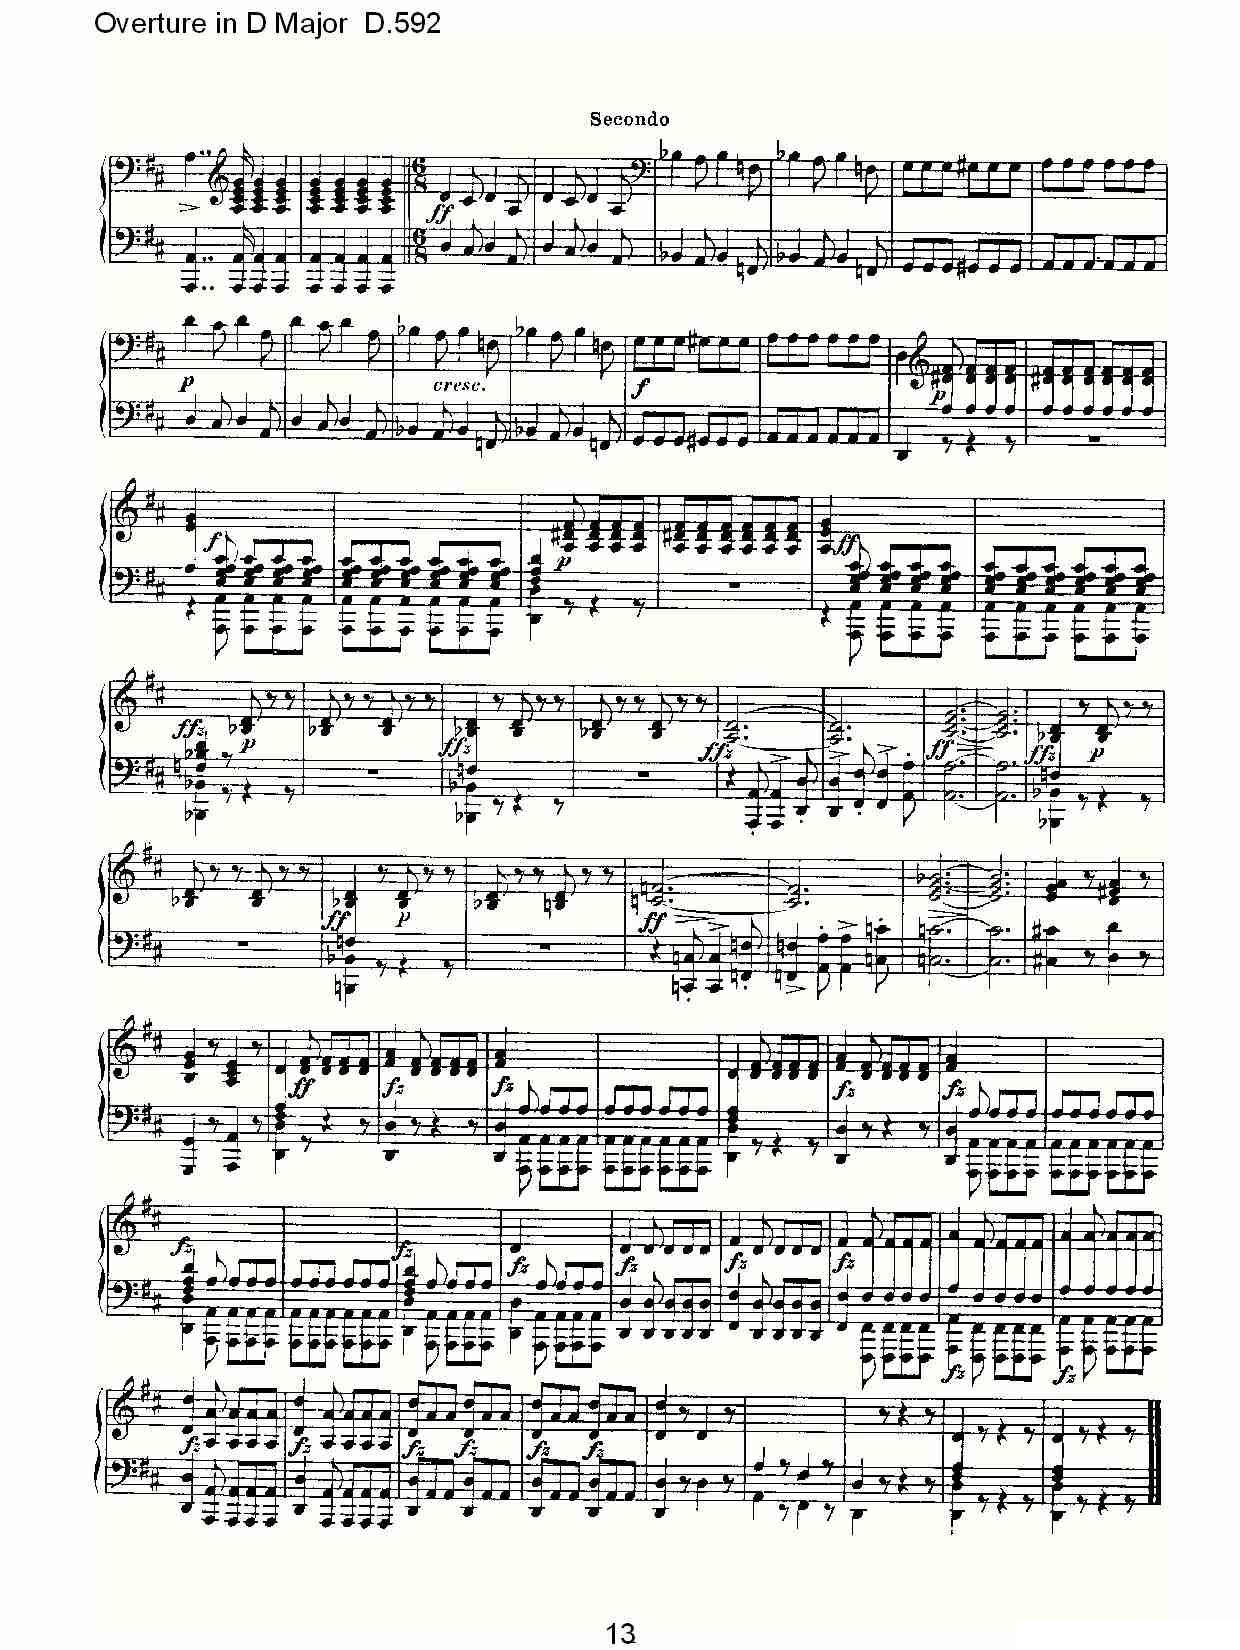 Overture in D Major D.592（Ｄ大调序曲 D.592）钢琴曲谱（图13）